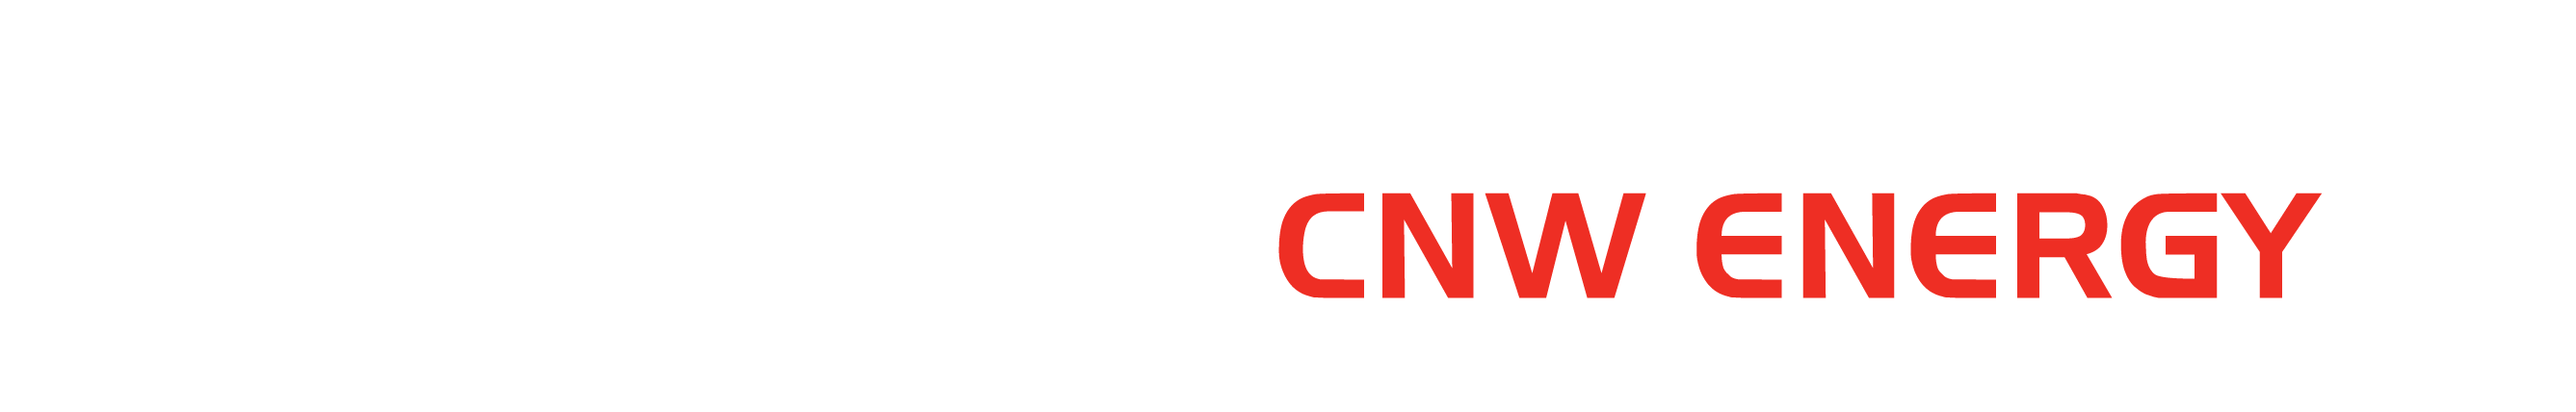 CNW Energy